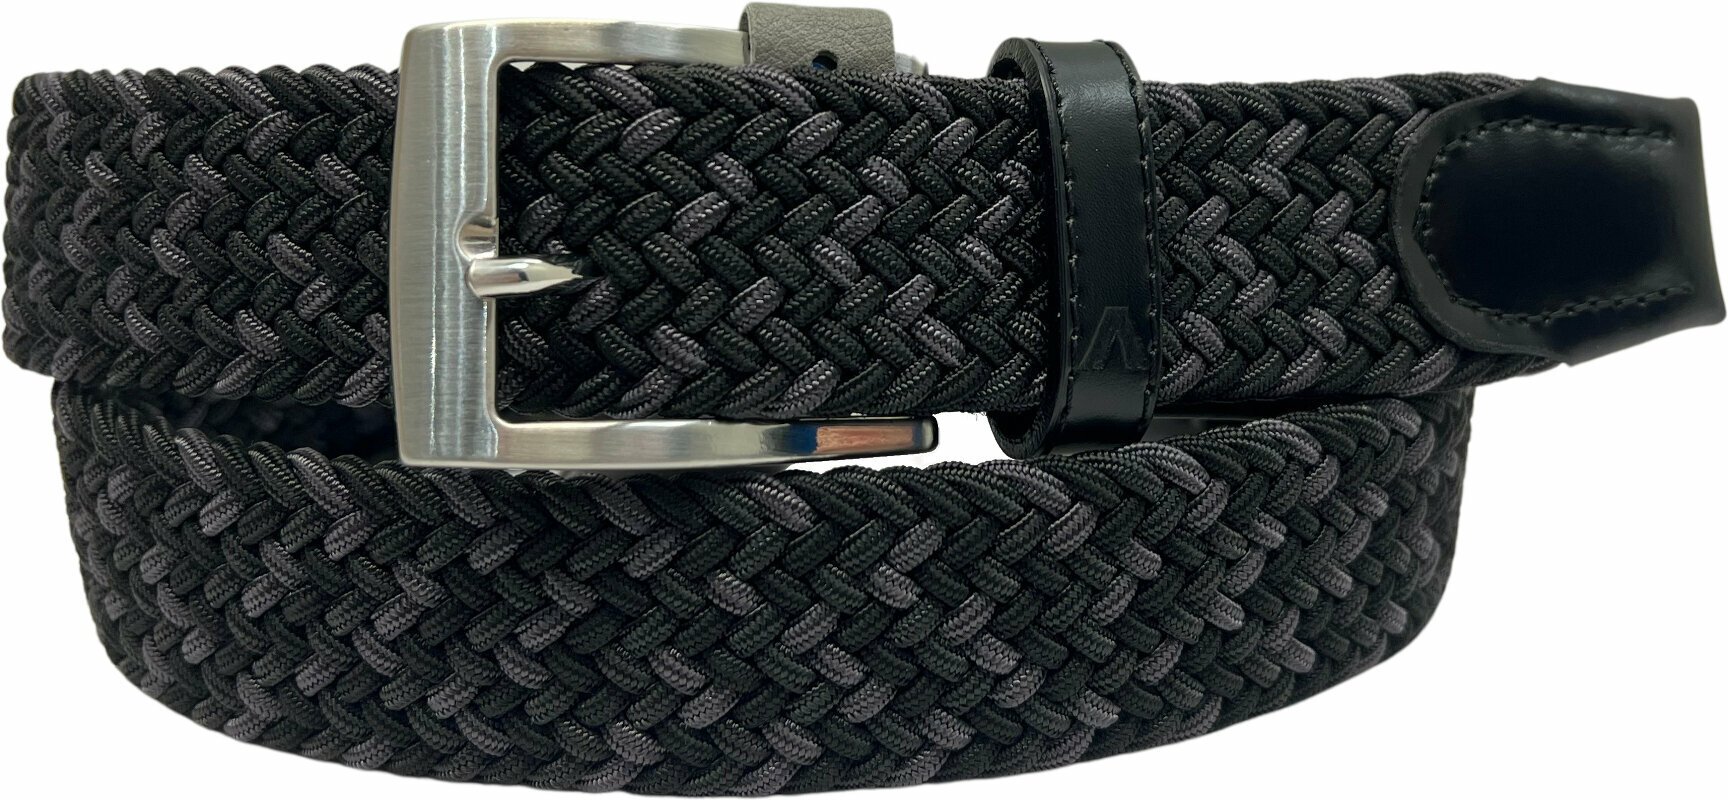 Opasok Alberto Gürtel Multicolor Braided Belt Black/Grey 100